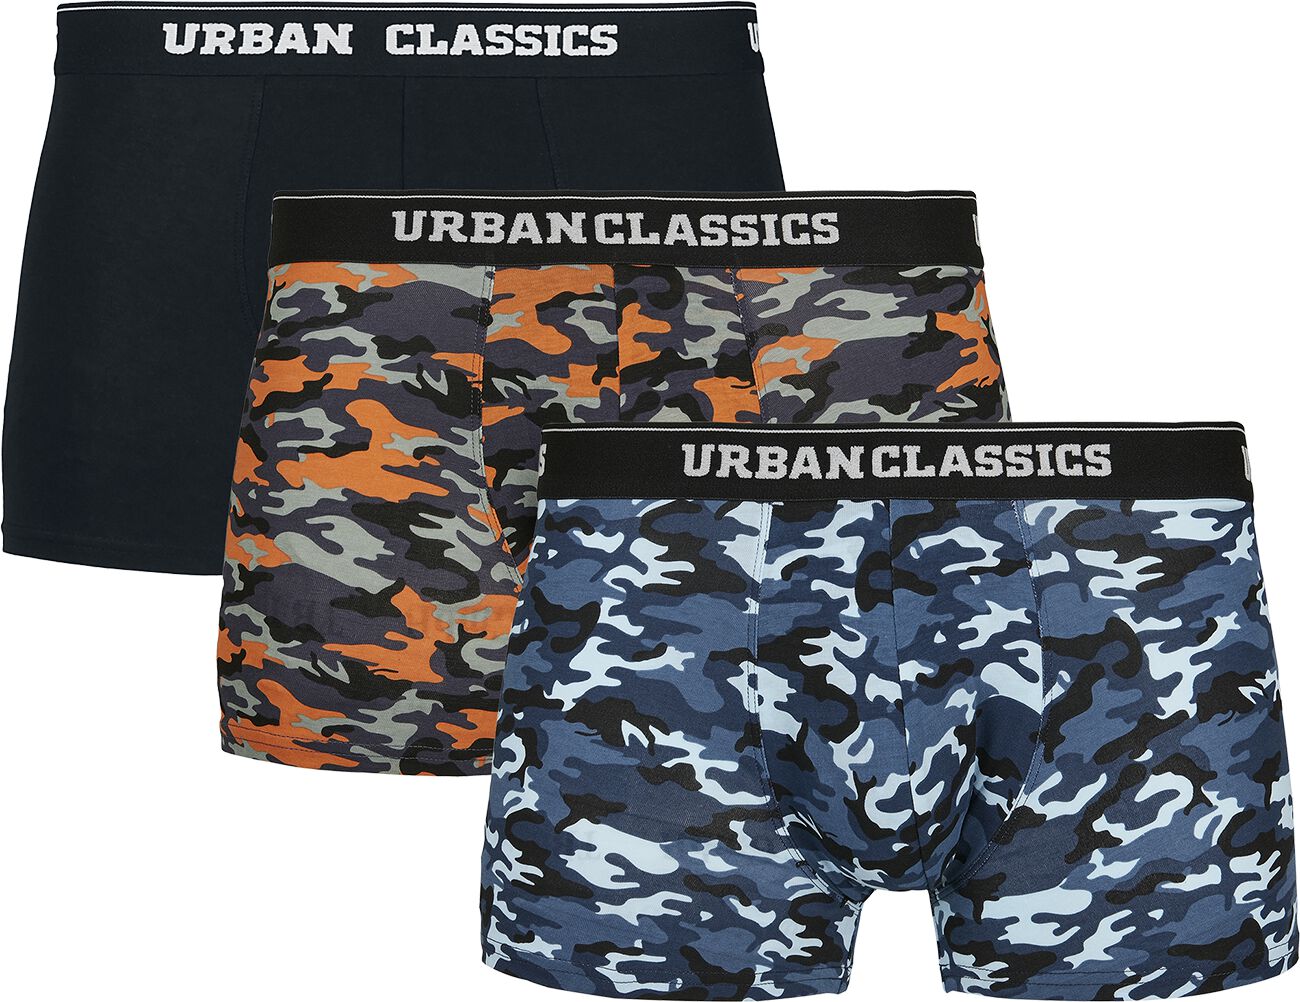 Urban Classics Boxer Short 3-Pack Boxershort-Set schwarz camouflage in M